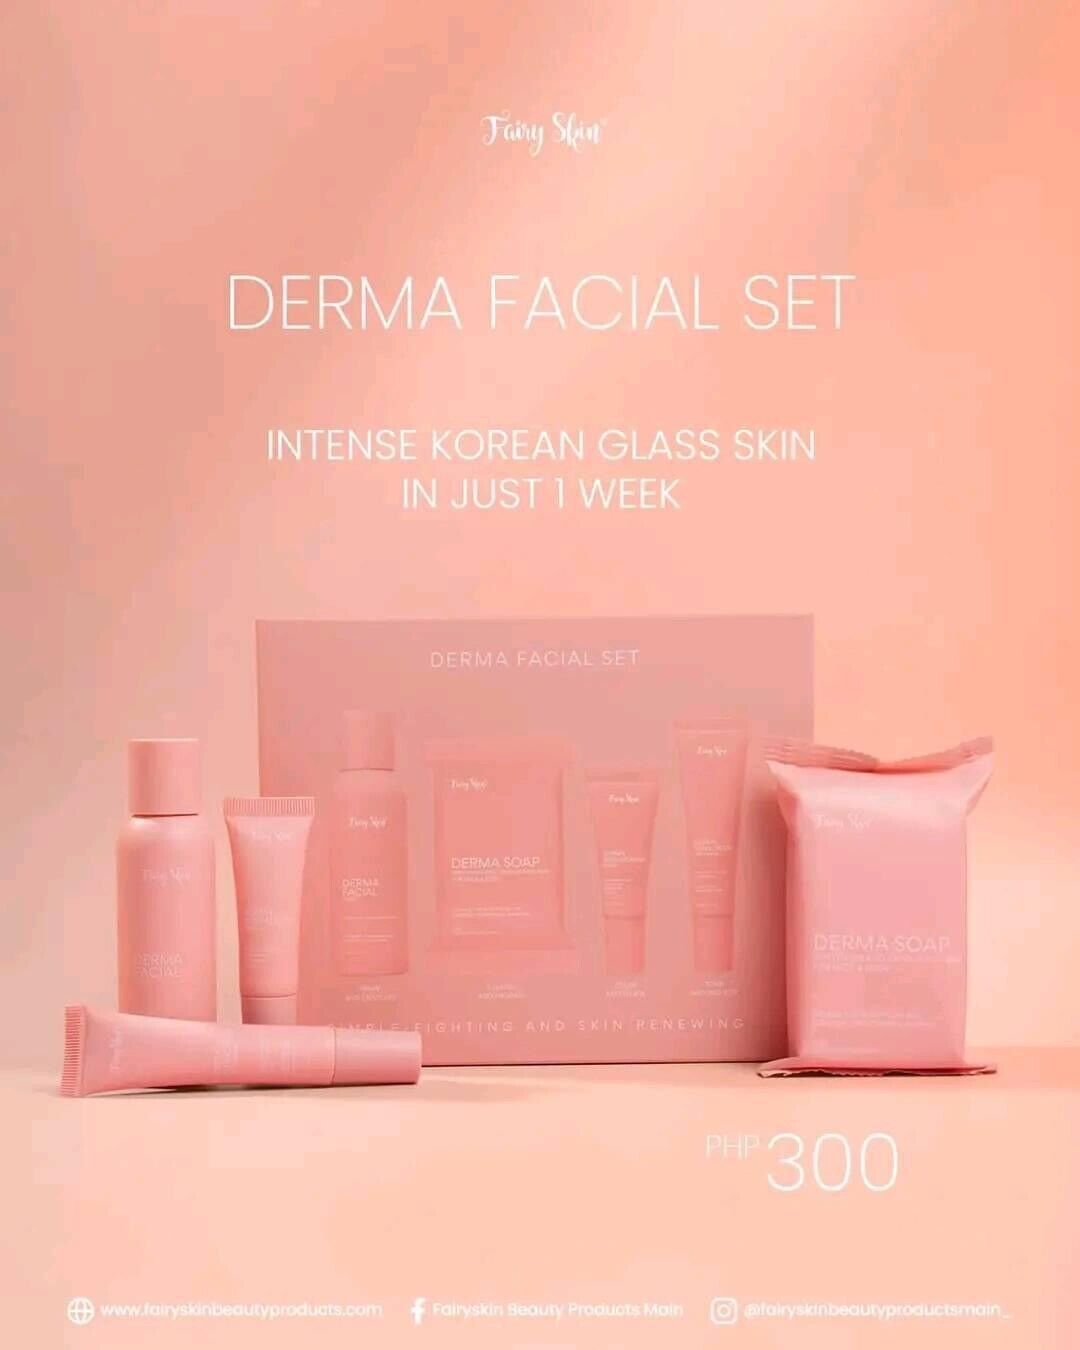 Derma Facial Set instant Korean Glass Skin Pimple Fighting & Skin Renewing Set